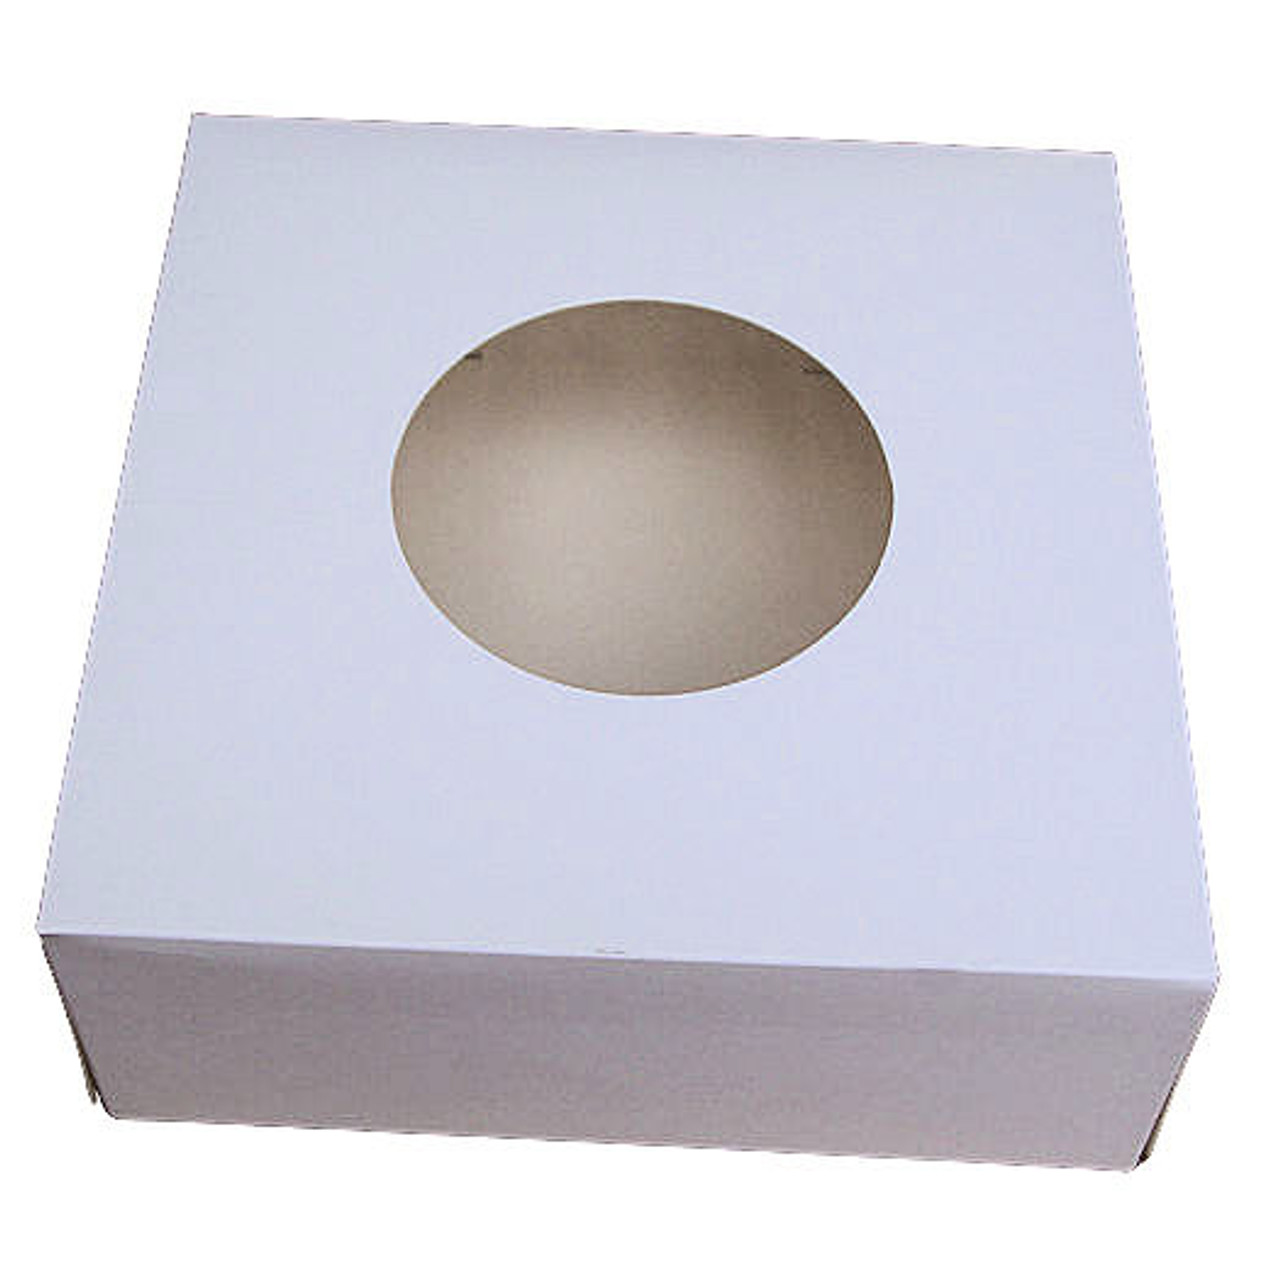 Pack x 50 Cardboard White 9 Cupcake or 20 Mini Cupcake box with window